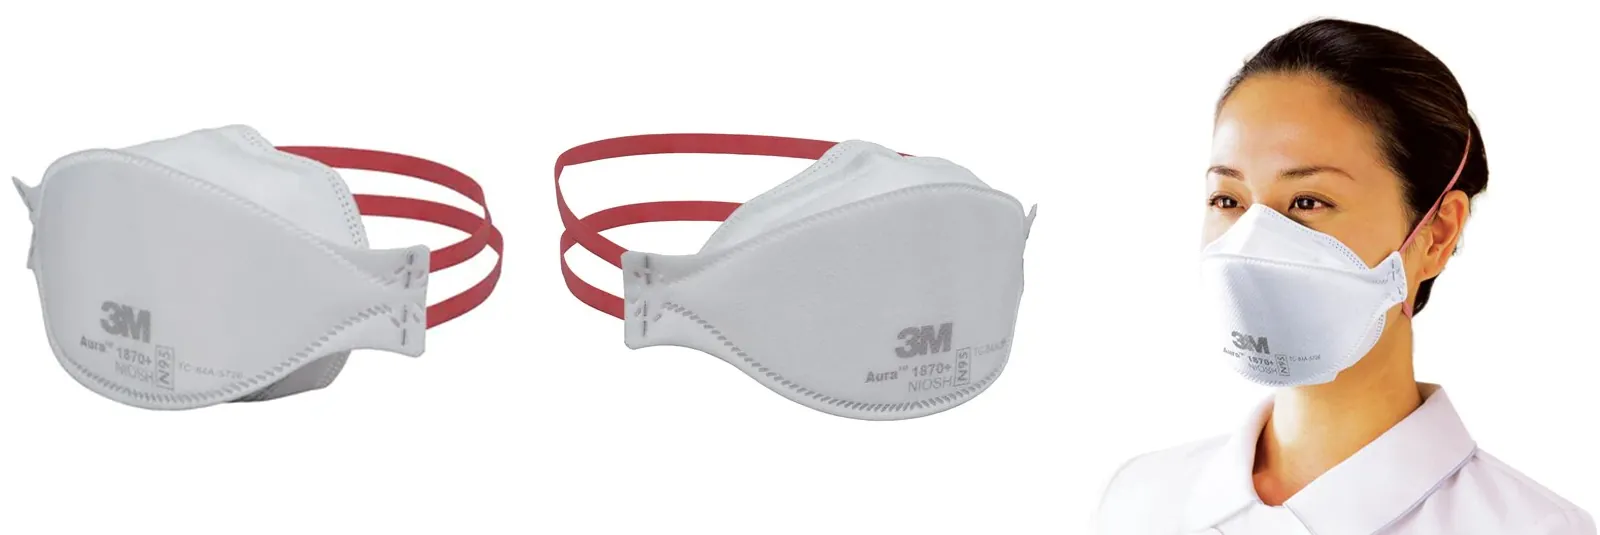 3M N95マスク（医療用）Aura 1870+ [20枚入 / 個包装]（微粒子用マスク・防塵防護マスク）